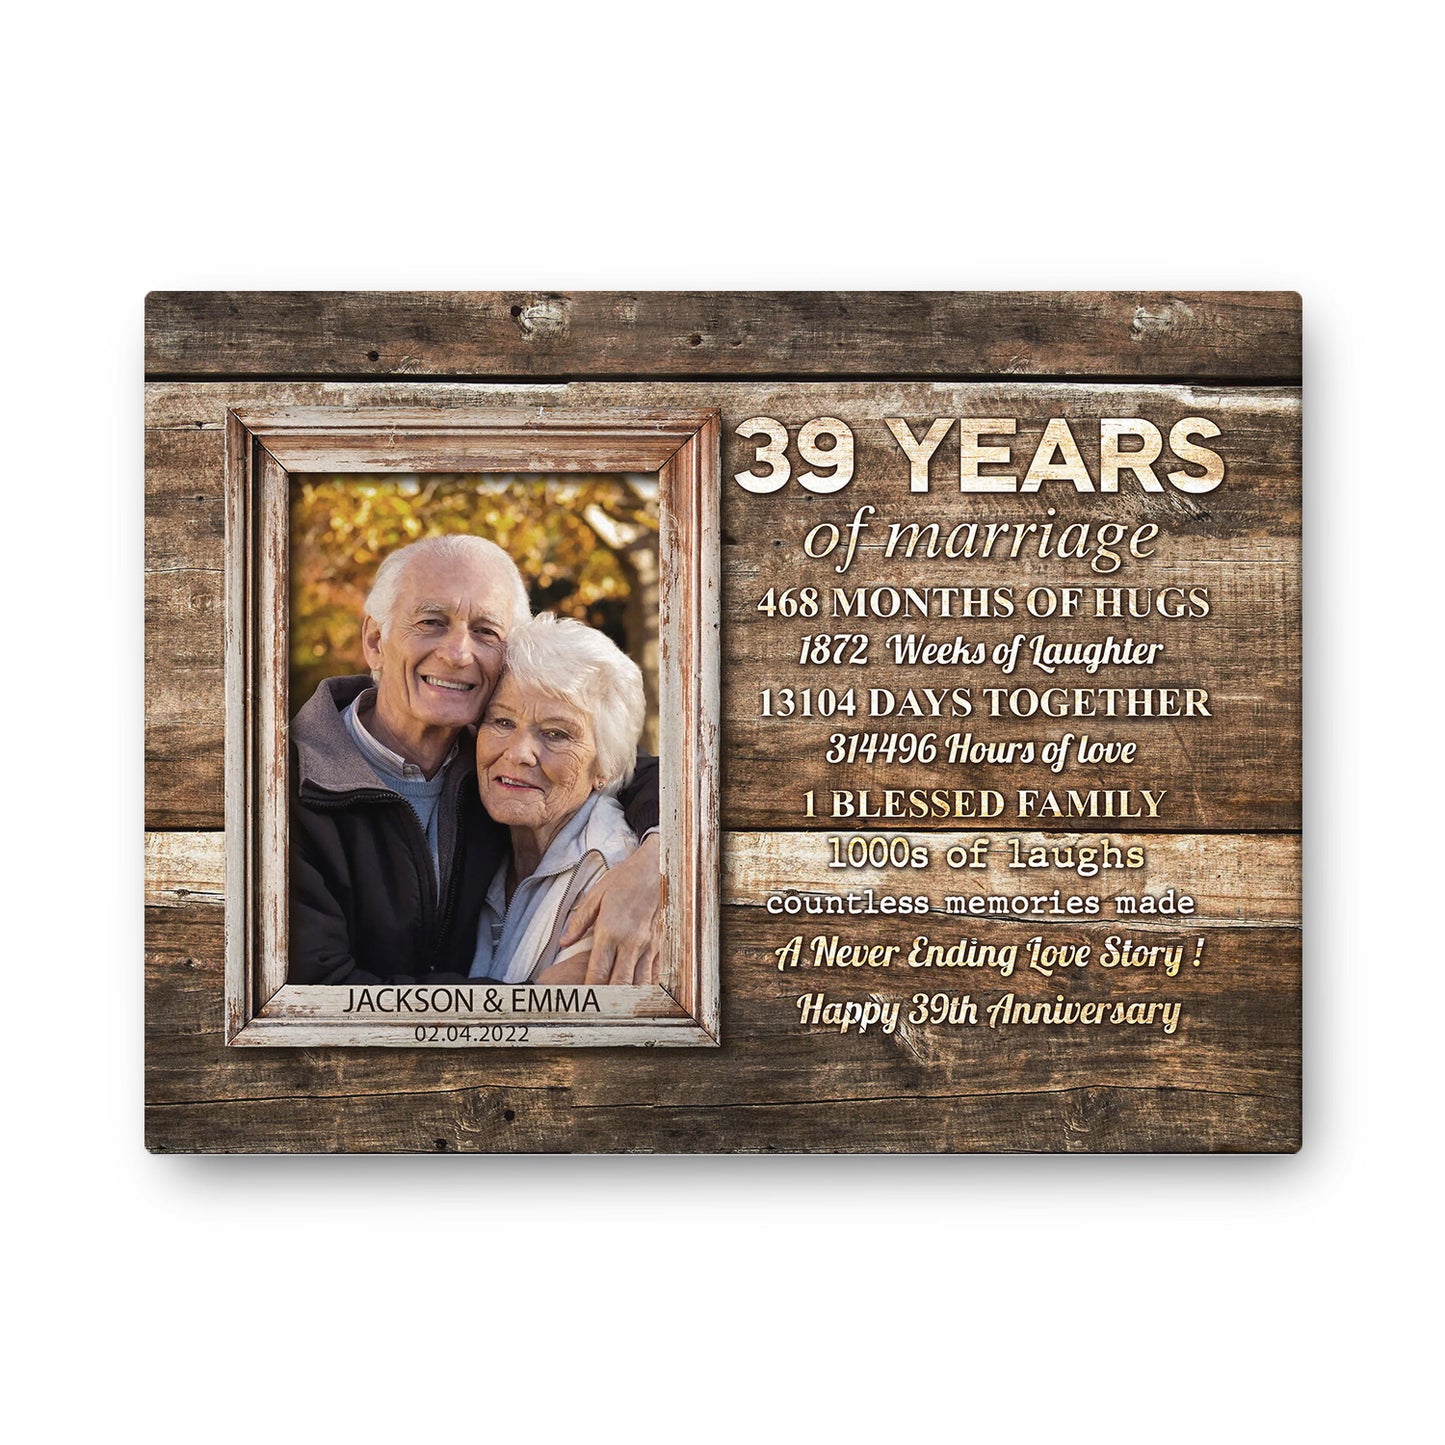 39 Years Of Marriage Custom Image Anniversary Canvas